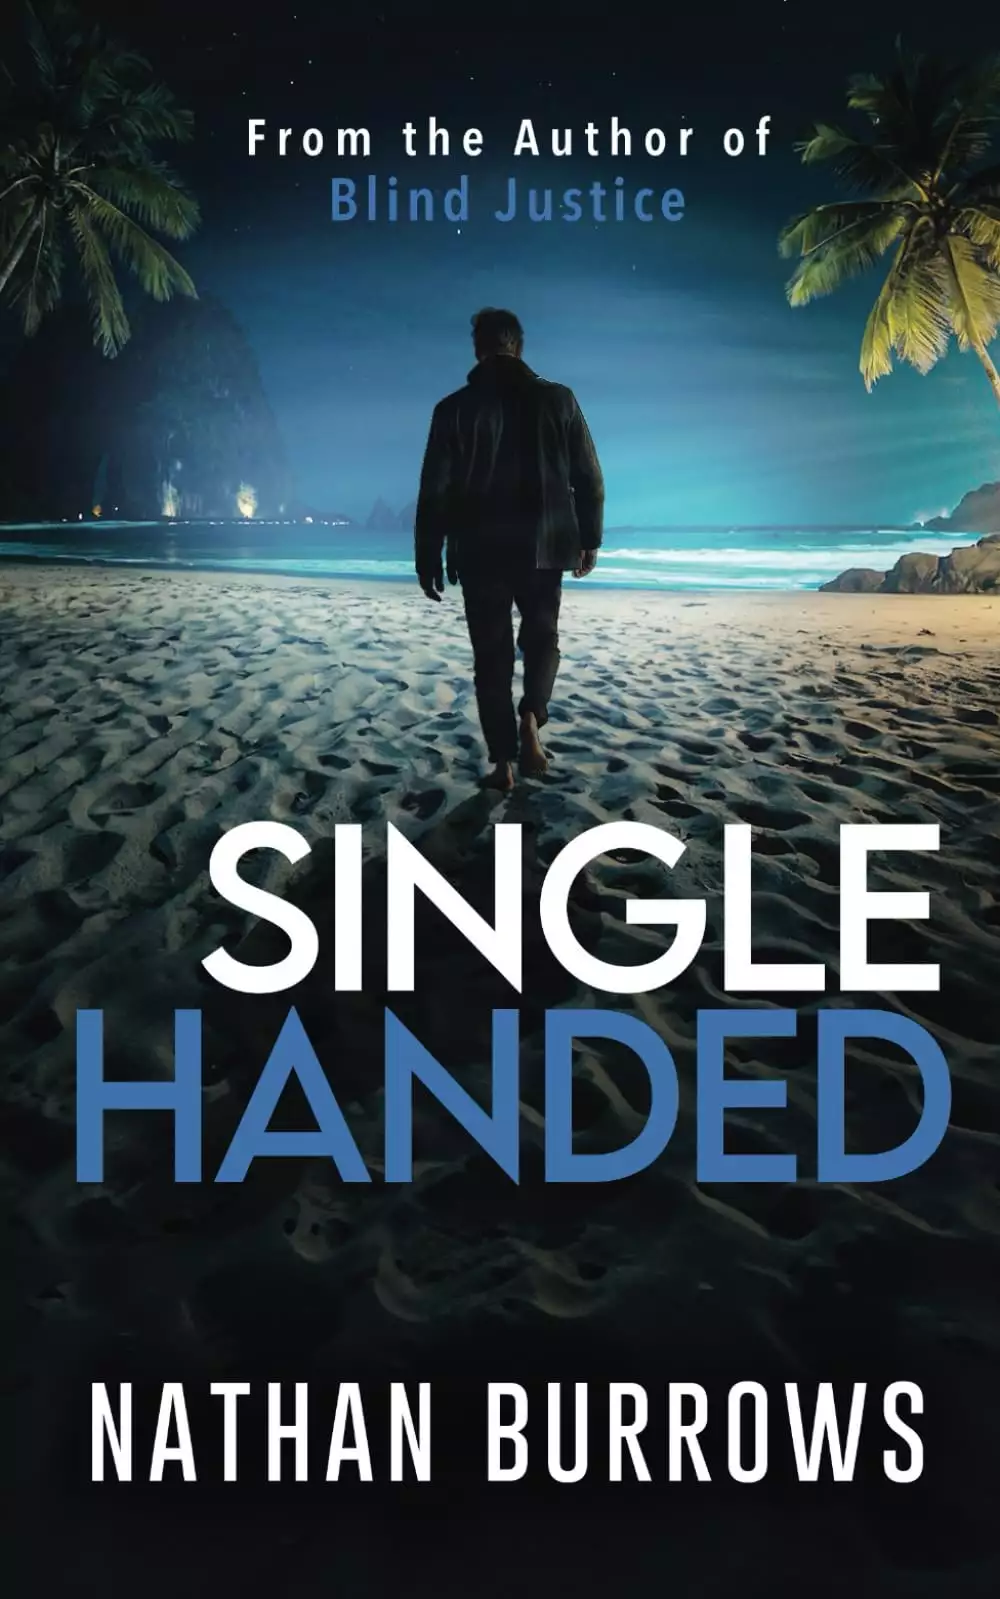 Single Handed